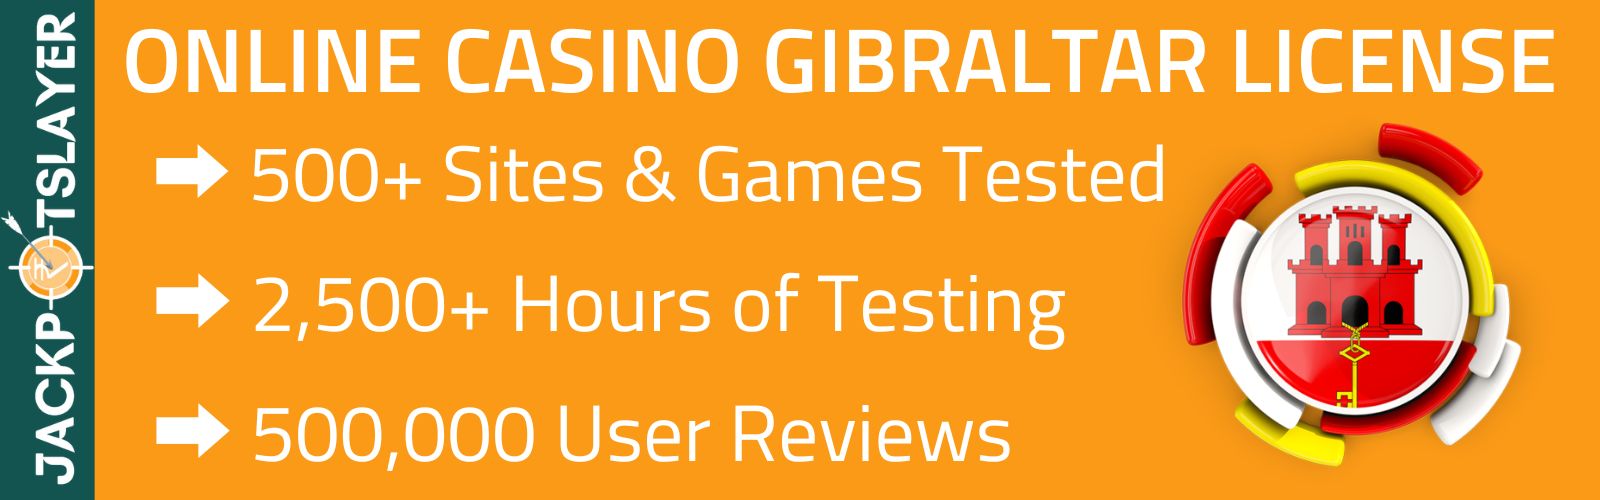 Online Casino Gibraltar License